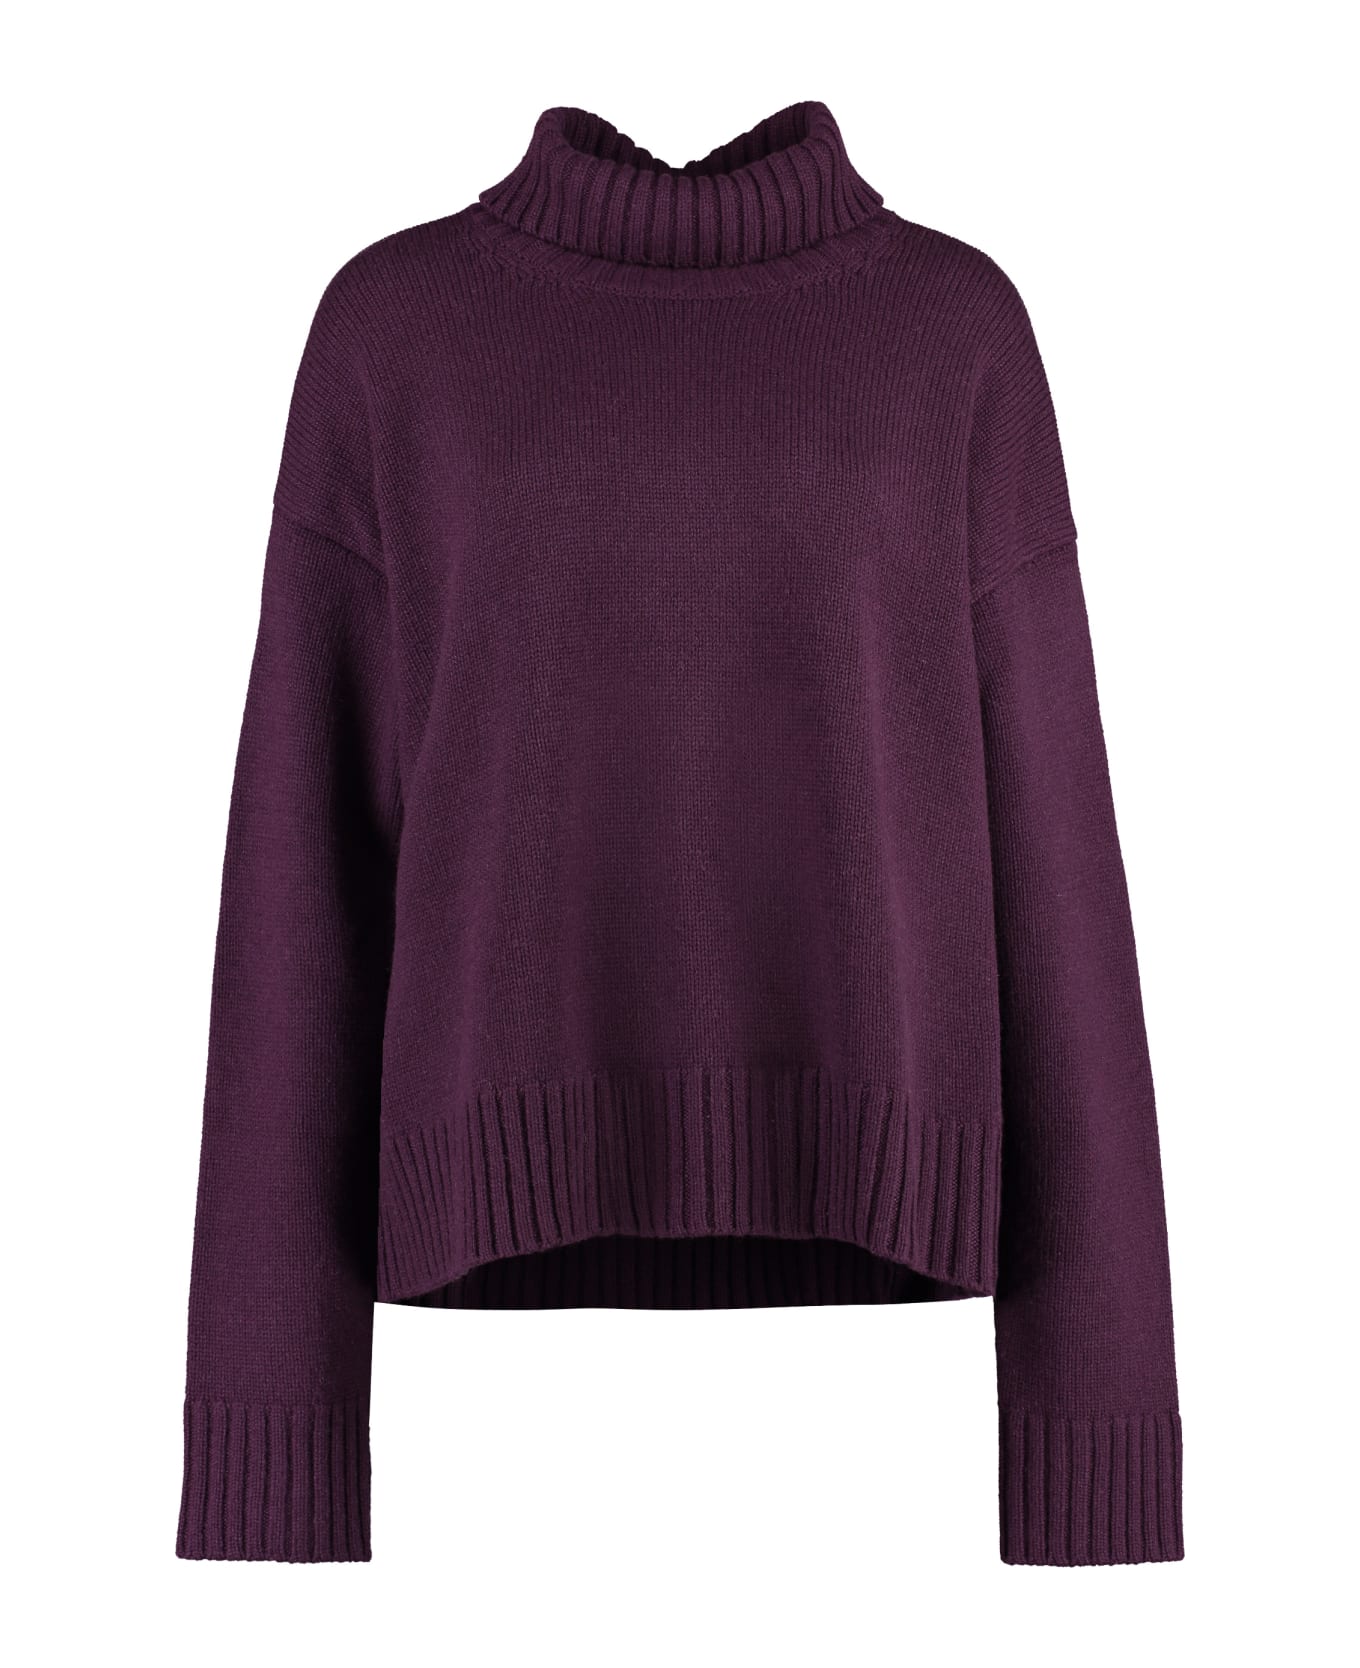 Jil Sander Cashmere Sweater - purple ニットウェア